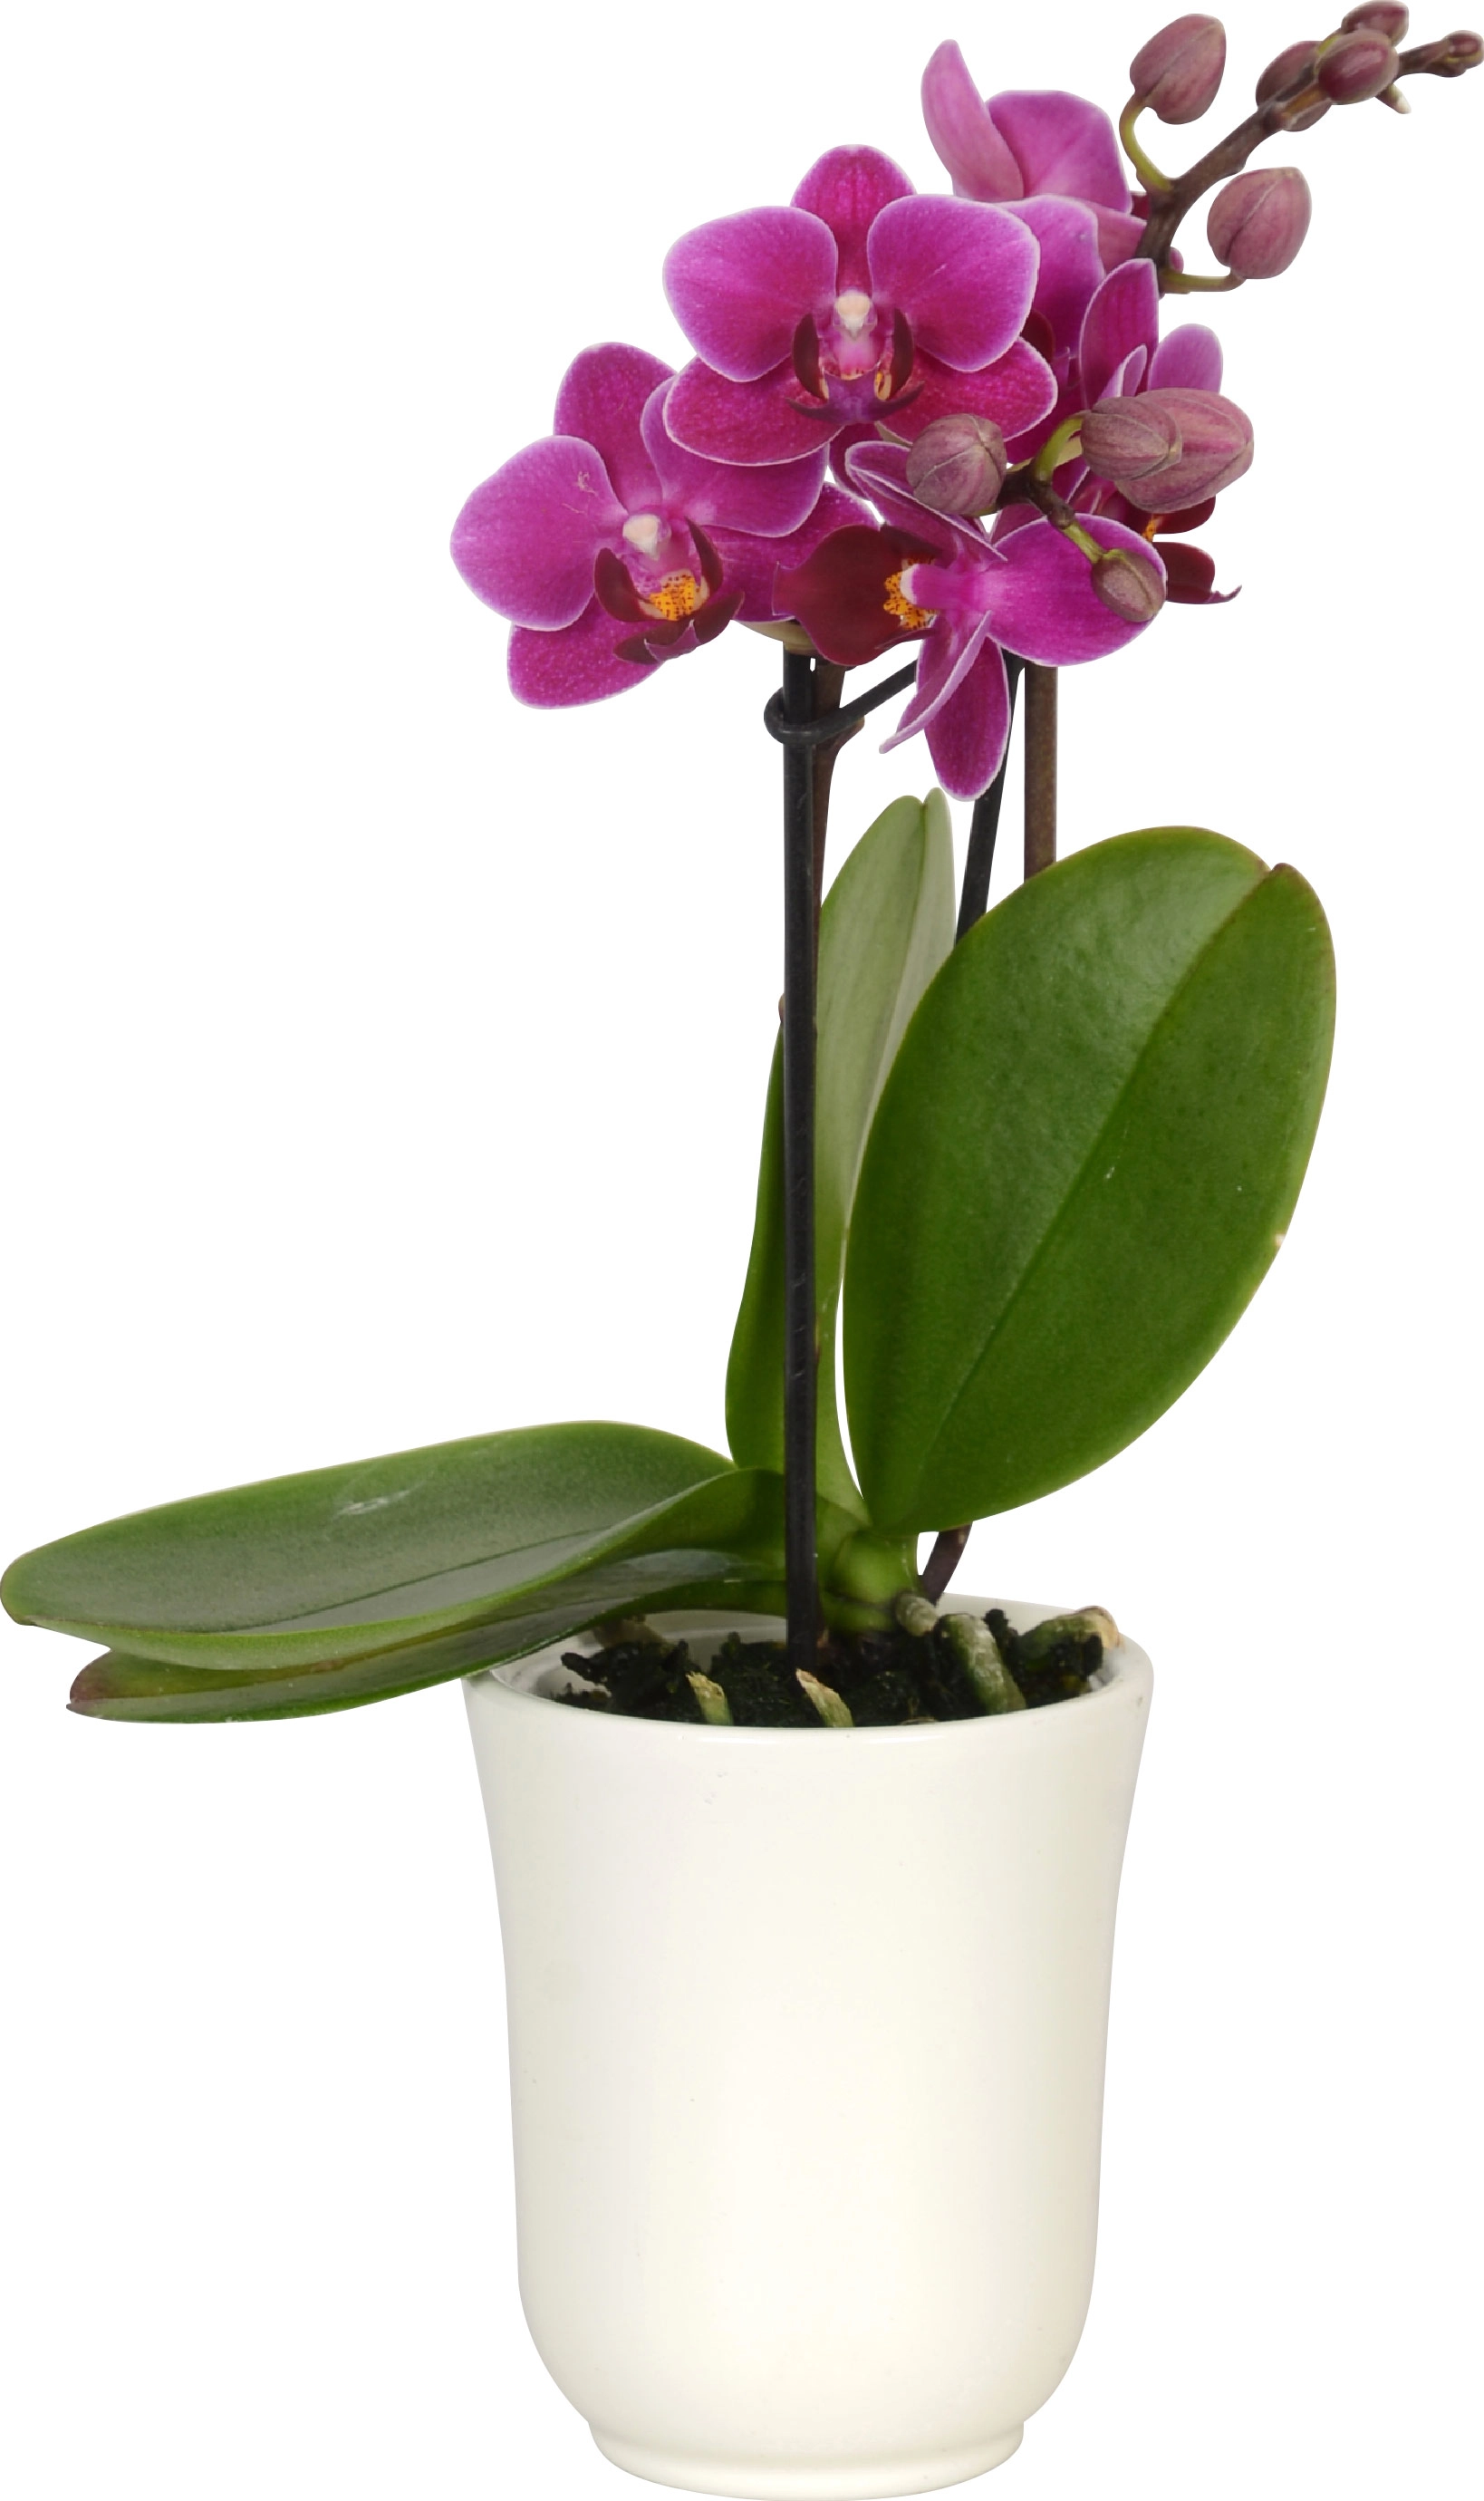 Mini Schmetterlings-Orchidee 2-Trieber in Keramik Topf-Ø 6 cm kaufen bei OBI